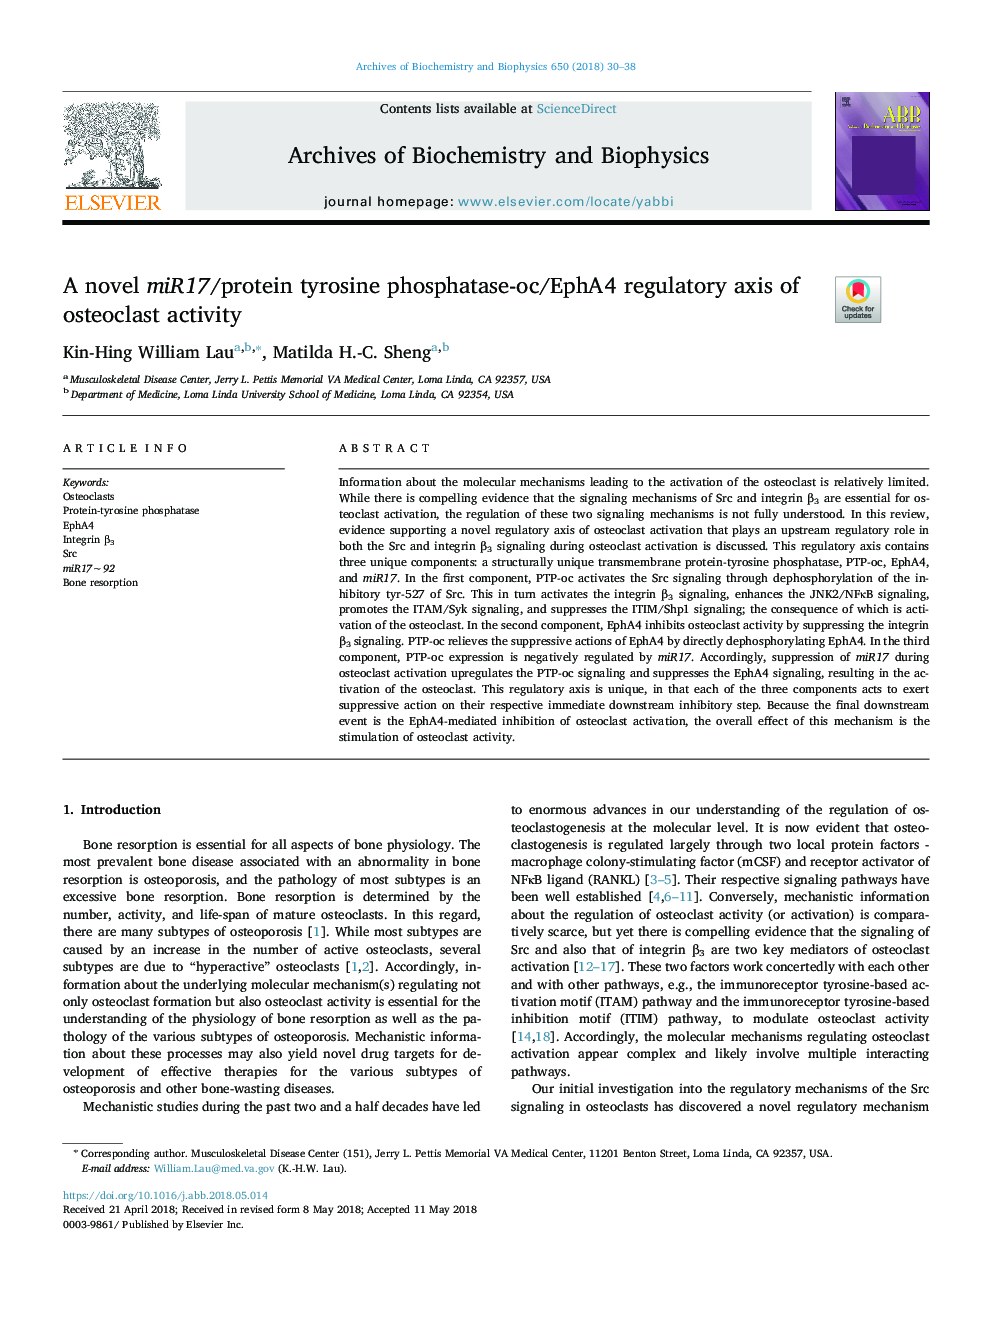 A novel miR17/protein tyrosine phosphatase-oc/EphA4 regulatory axis of osteoclast activity